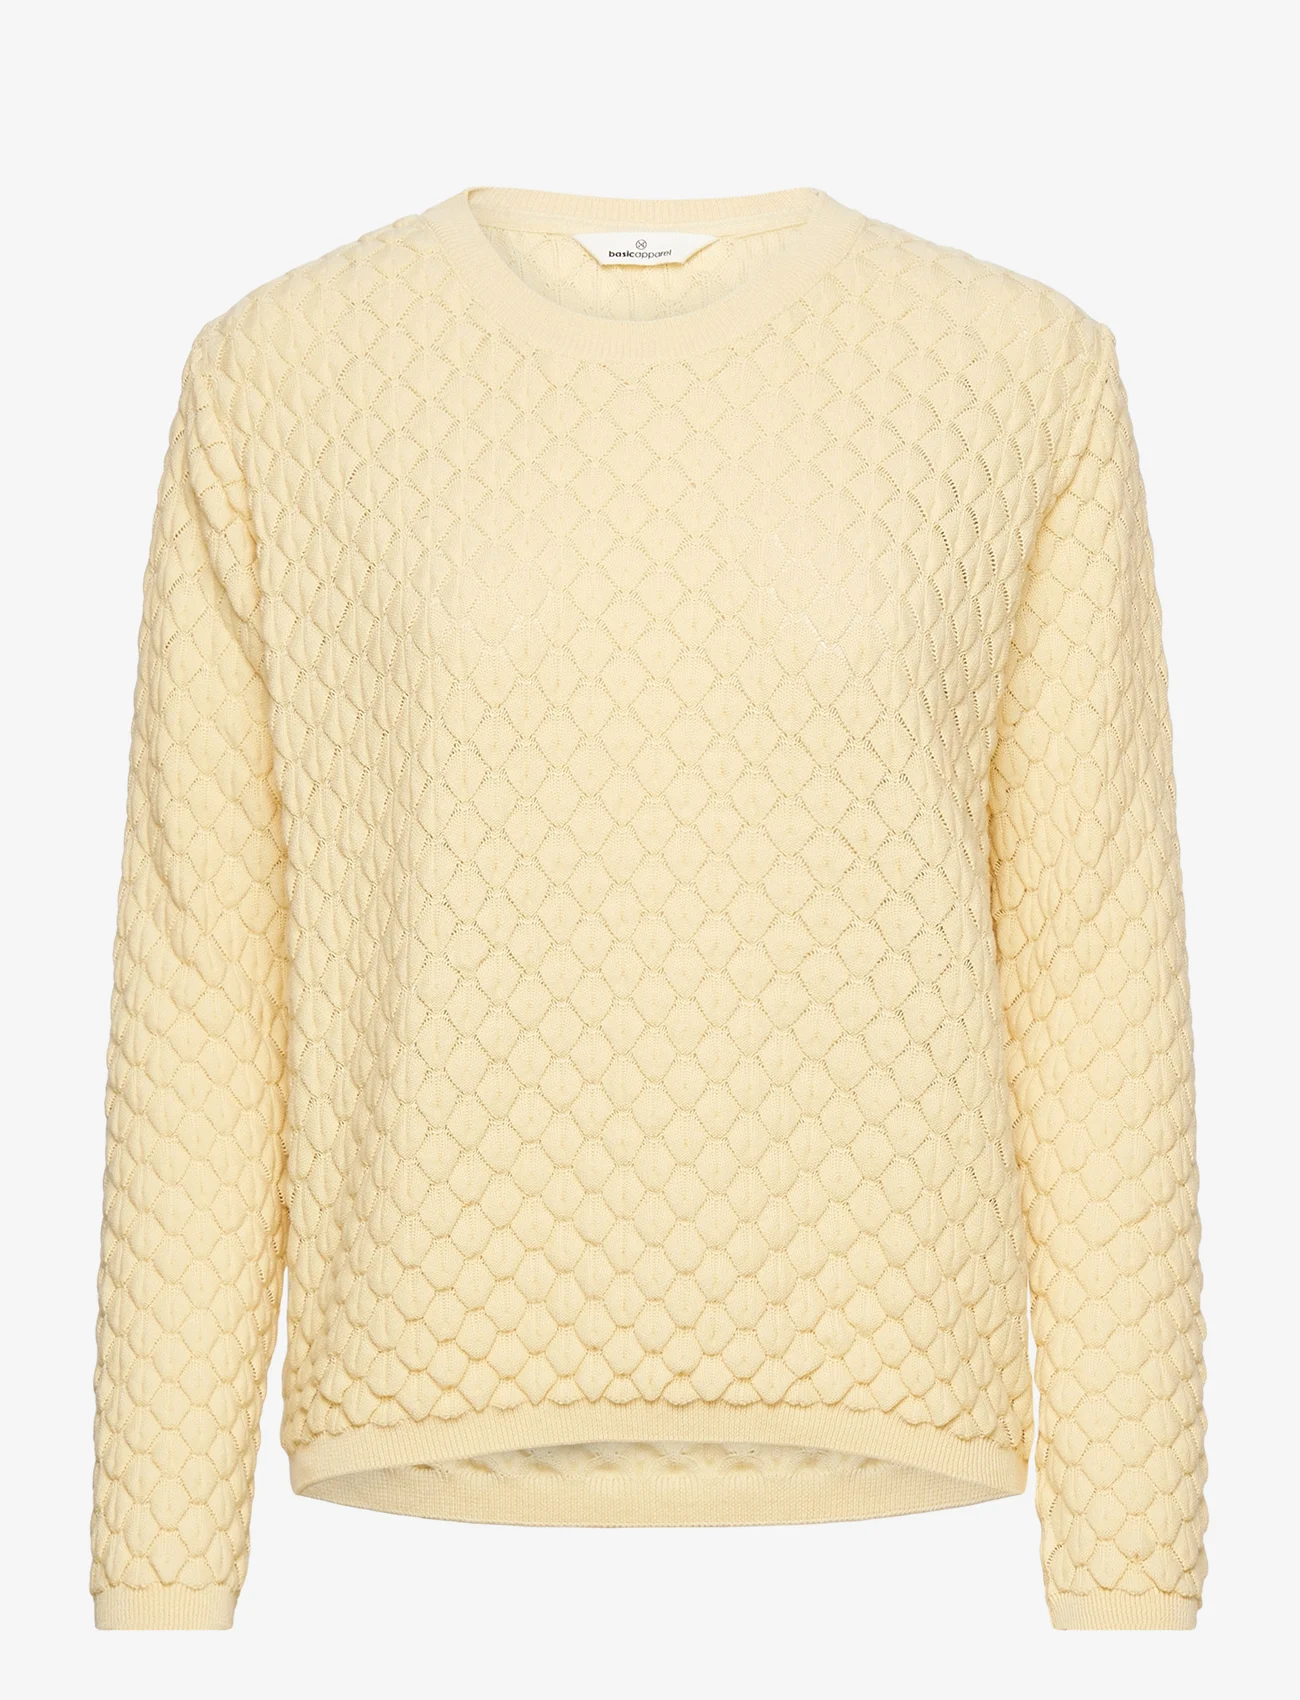 Basic Apparel - Camilla Sweater - trøjer - straw - 0